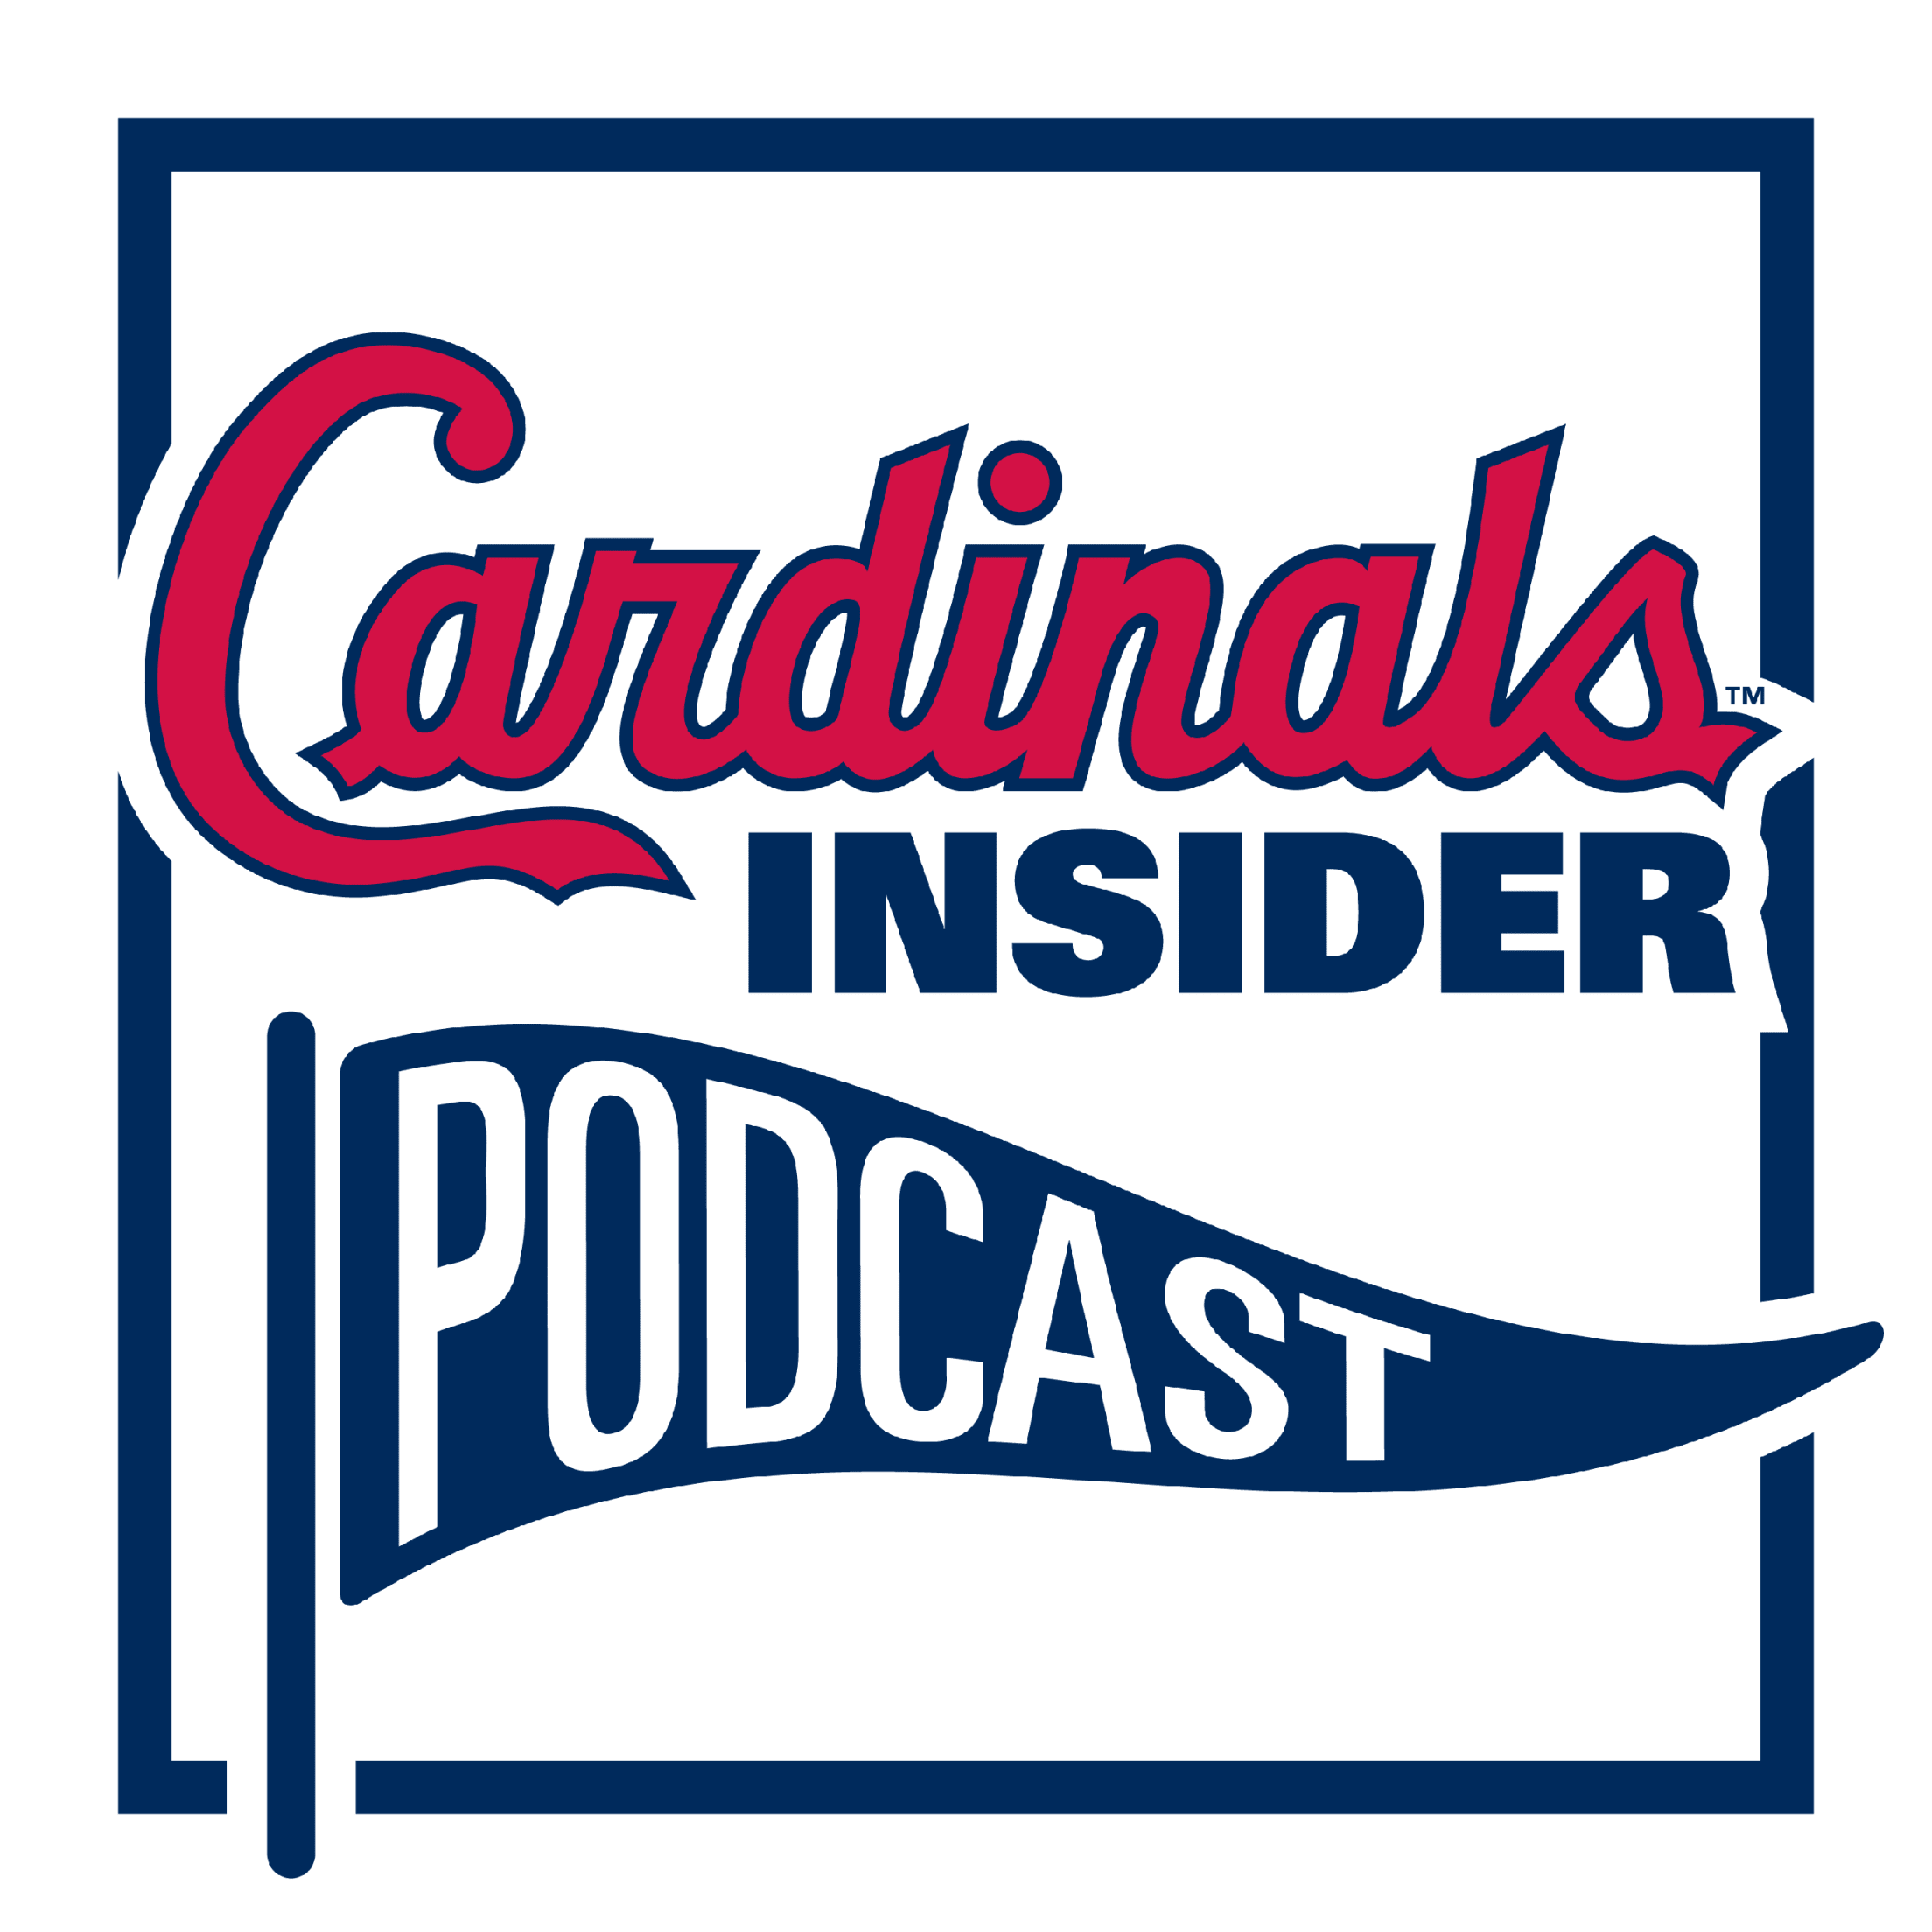 St. Louis Cardinals Baseball Team Logo Editorial Photo - Image of